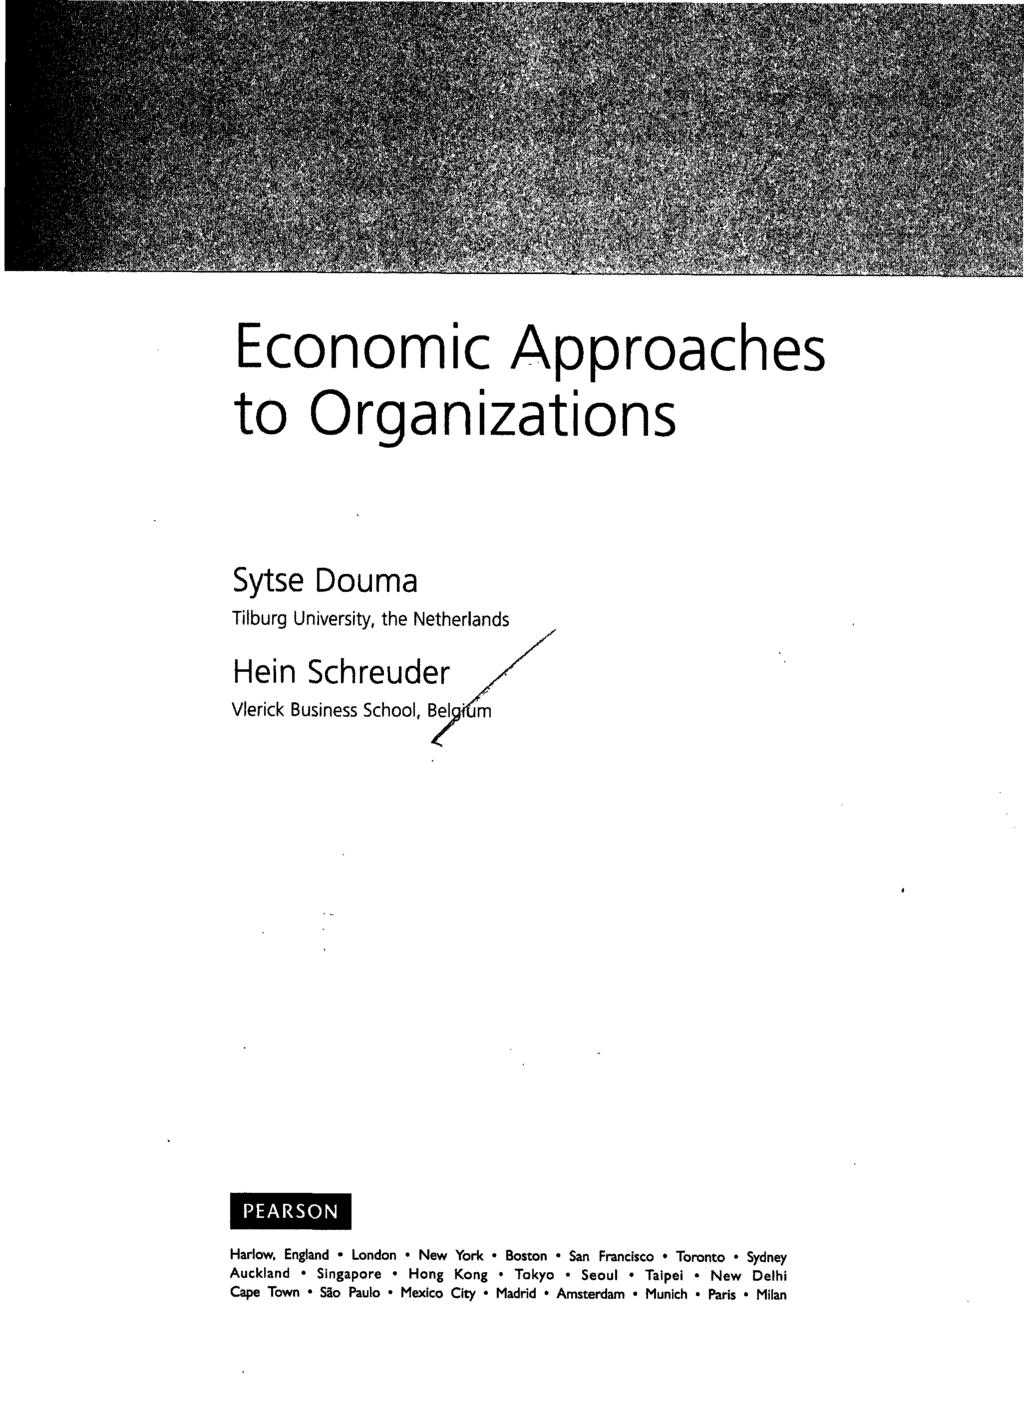 ... Economic Approaches to Organizations Sytse Douma Tilburg University, the Netherlands Hein Schreuder Vlerick Business School, Belgium PEARSON Harlow, England London